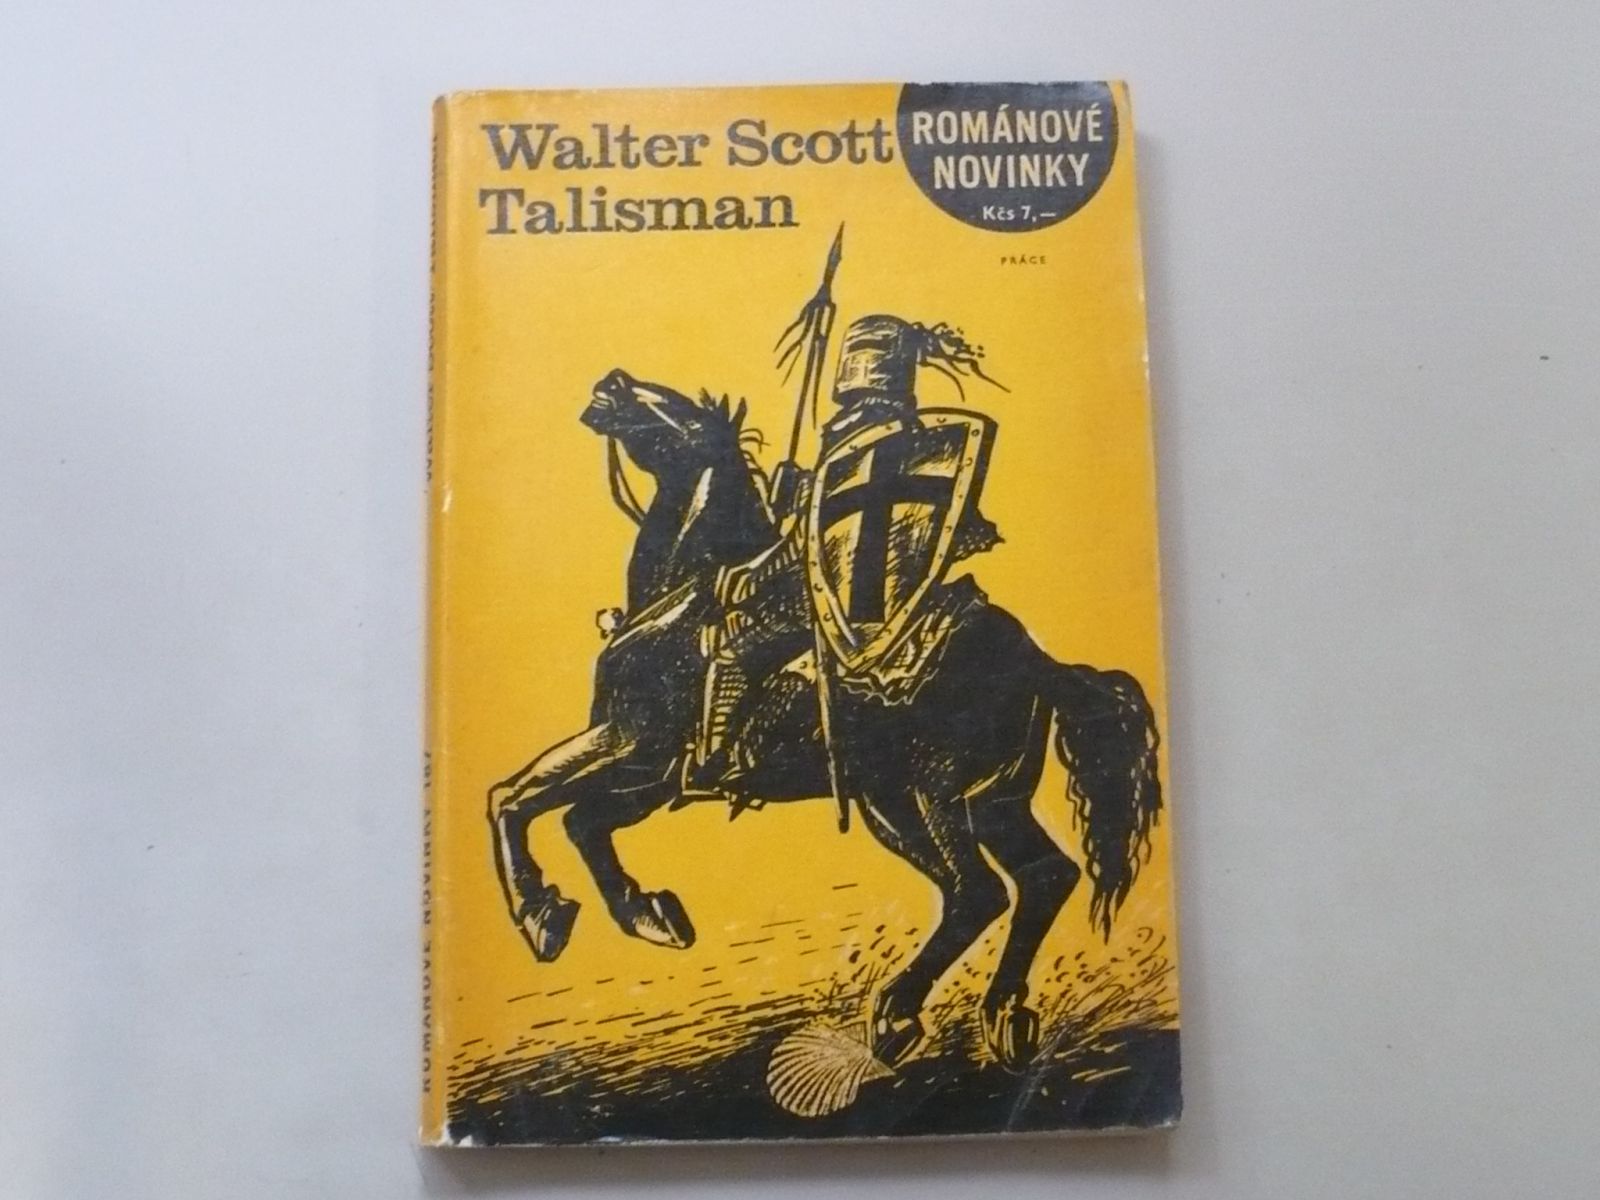 Walter Scott - Talisman (1971) Románové novinky 187